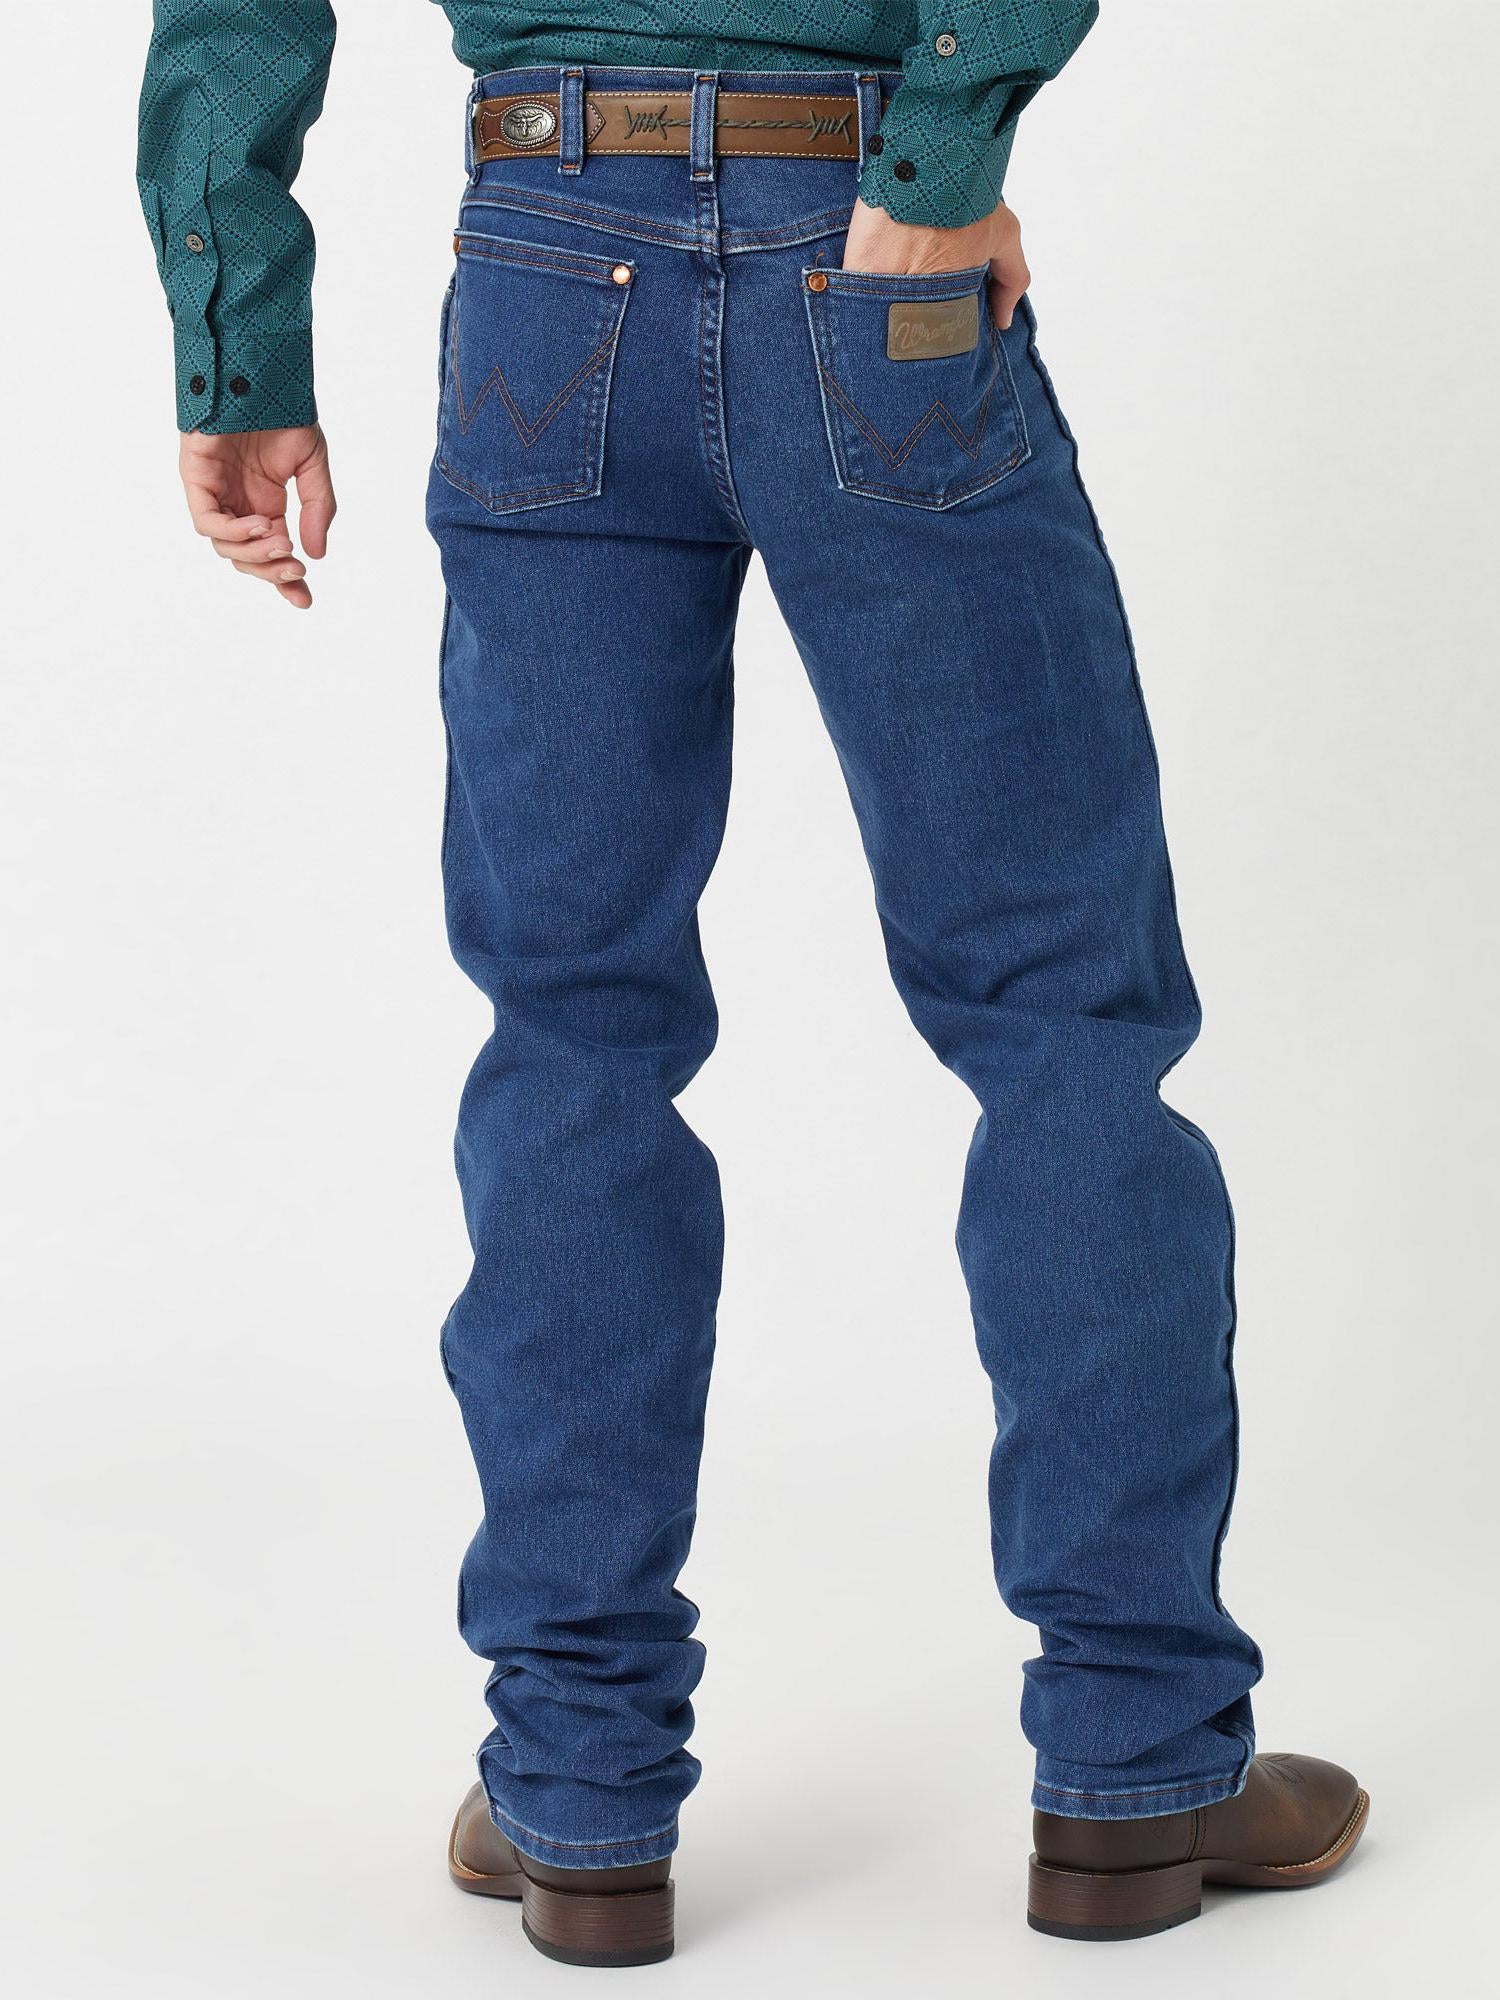 Wrangler Cowboy Cut Active Flex Original Fit Mens Jeans - Riding Warehouse